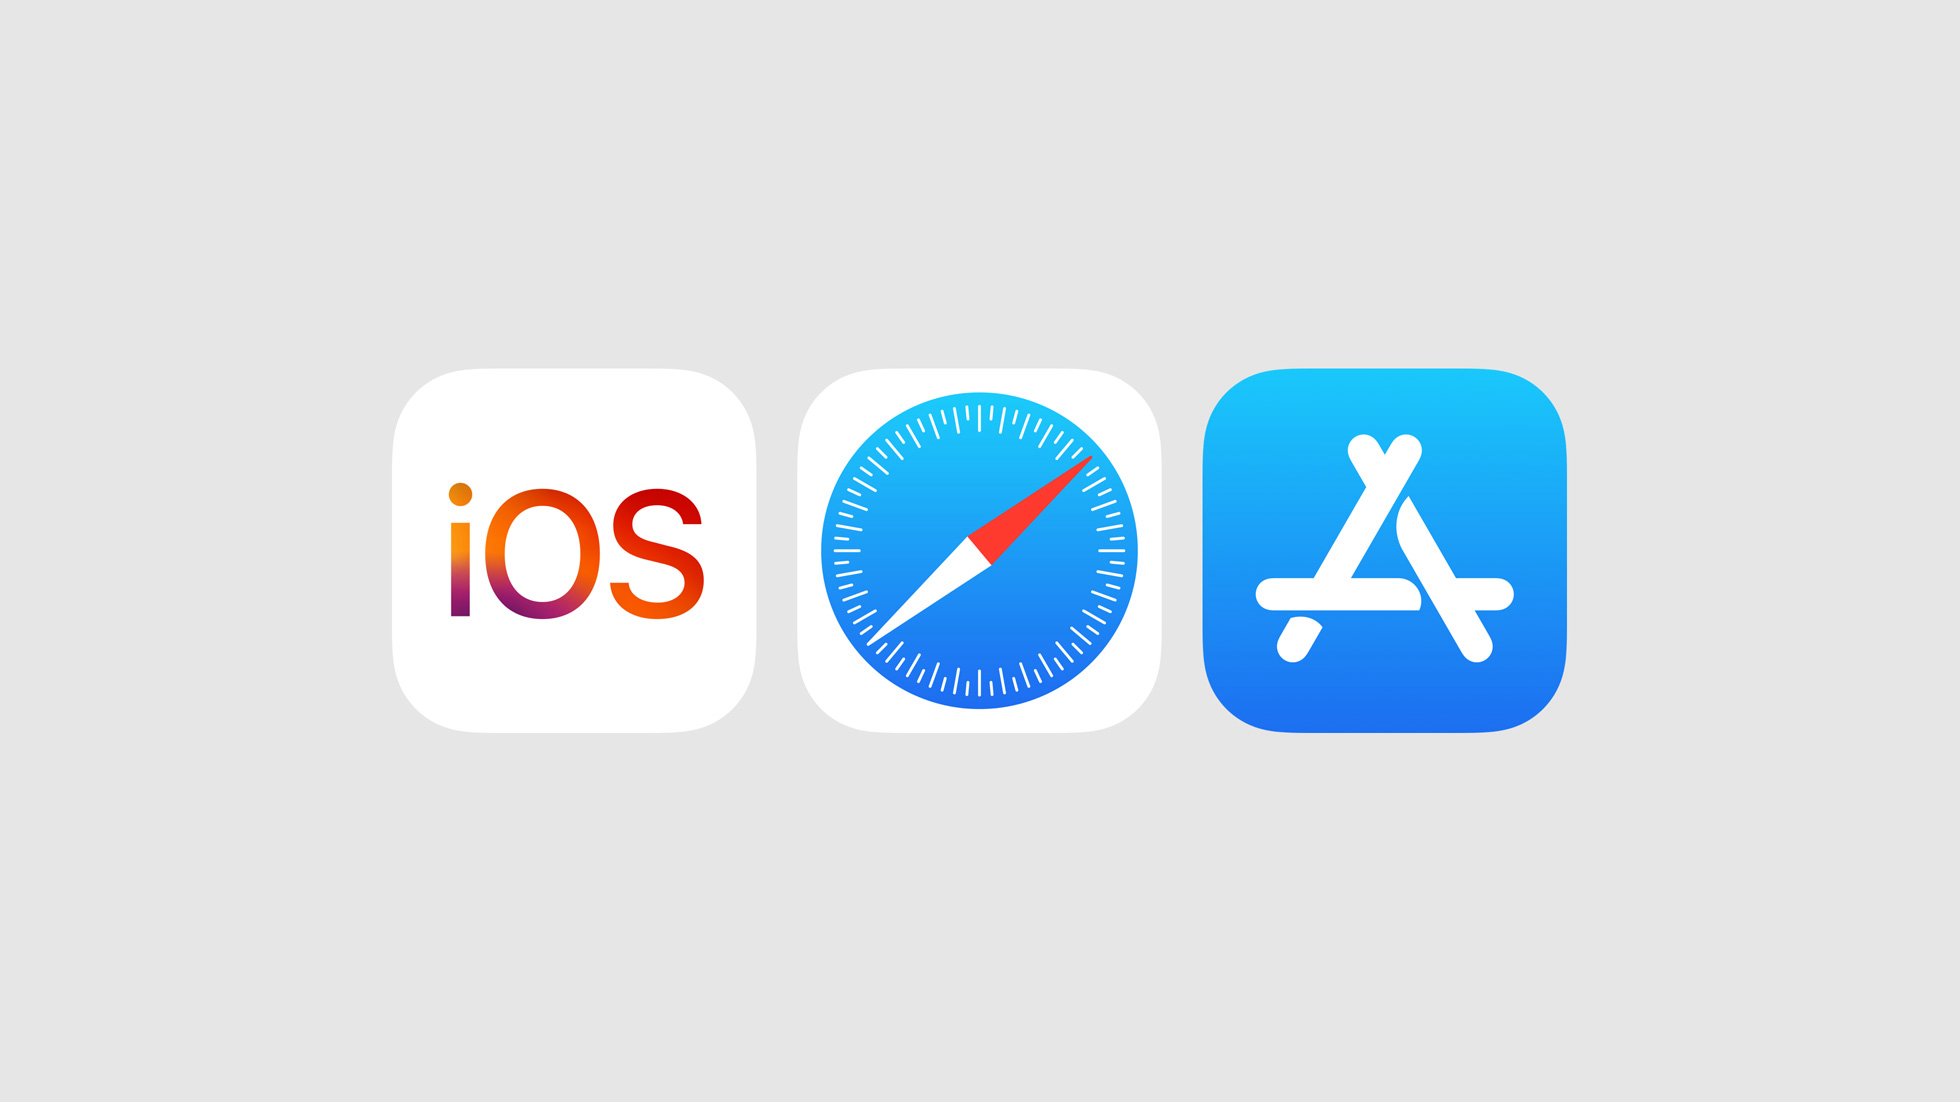 iOS, Safari, and App Store app icons 